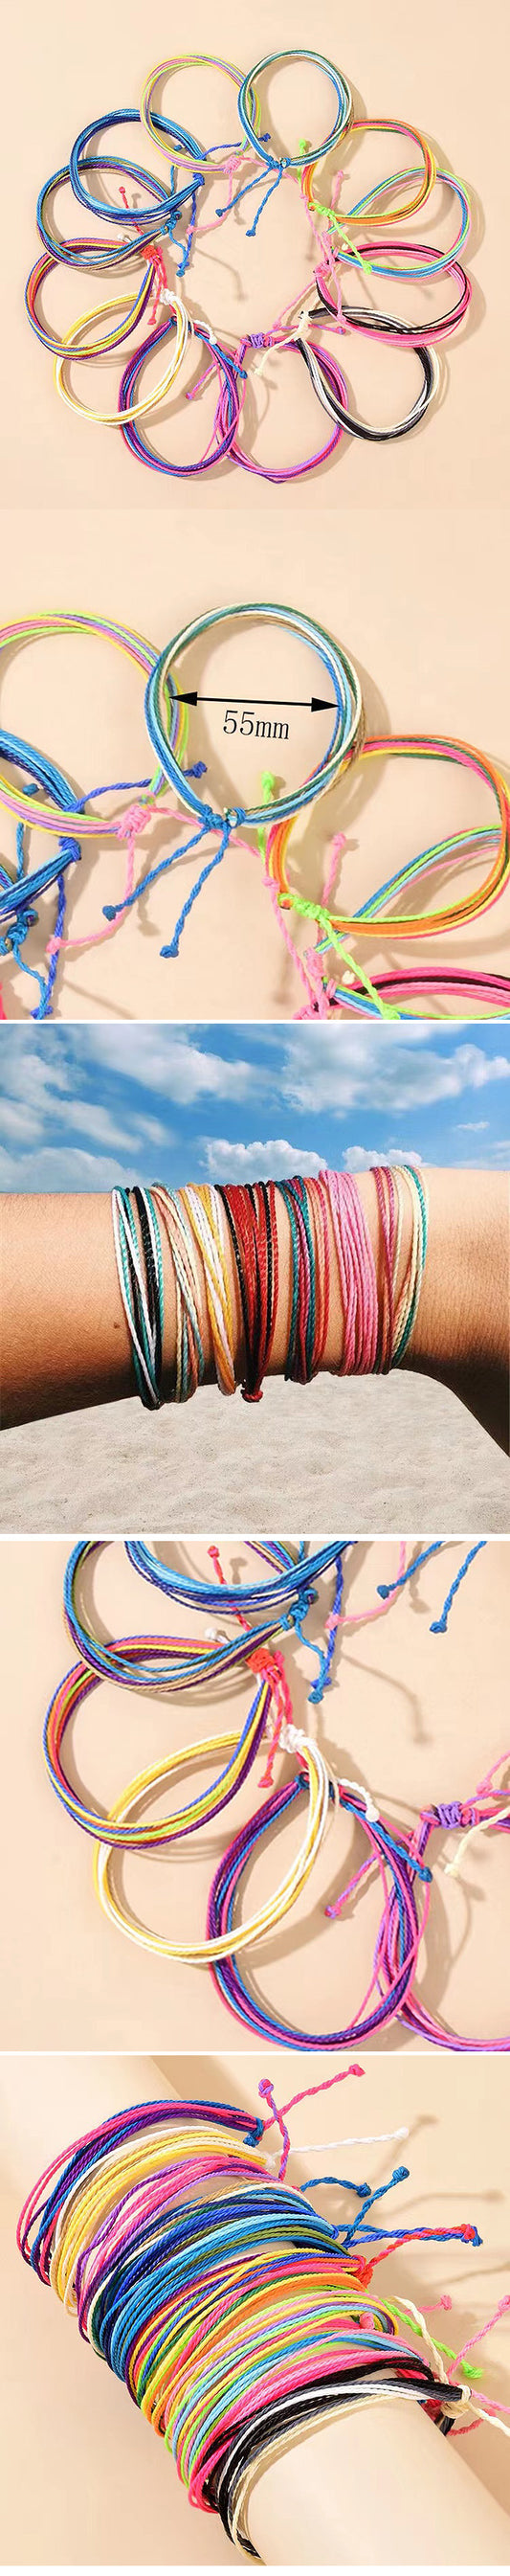 Vacation Colorful Rope Braid Unisex Bracelets